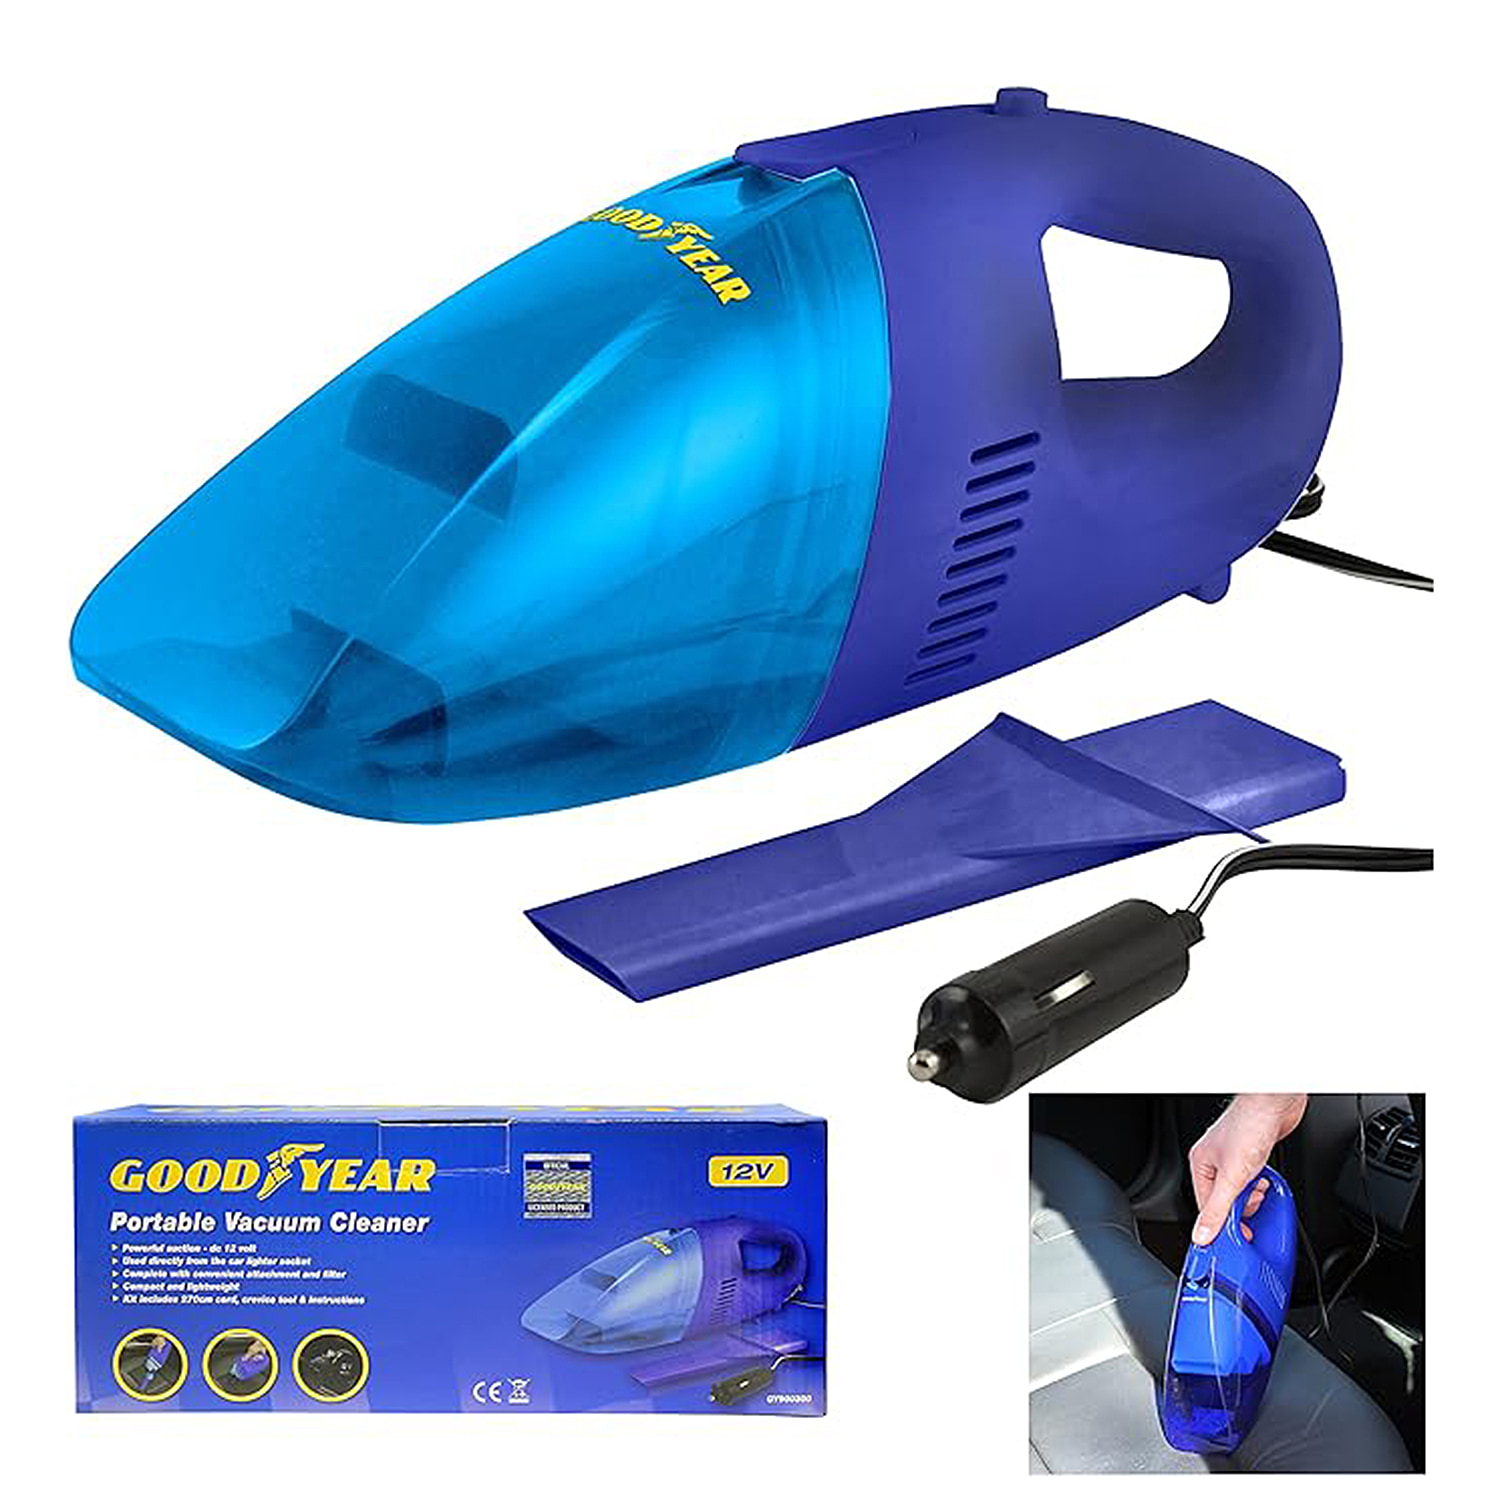 Goodyear-Portable-Vacuum-Cleaner